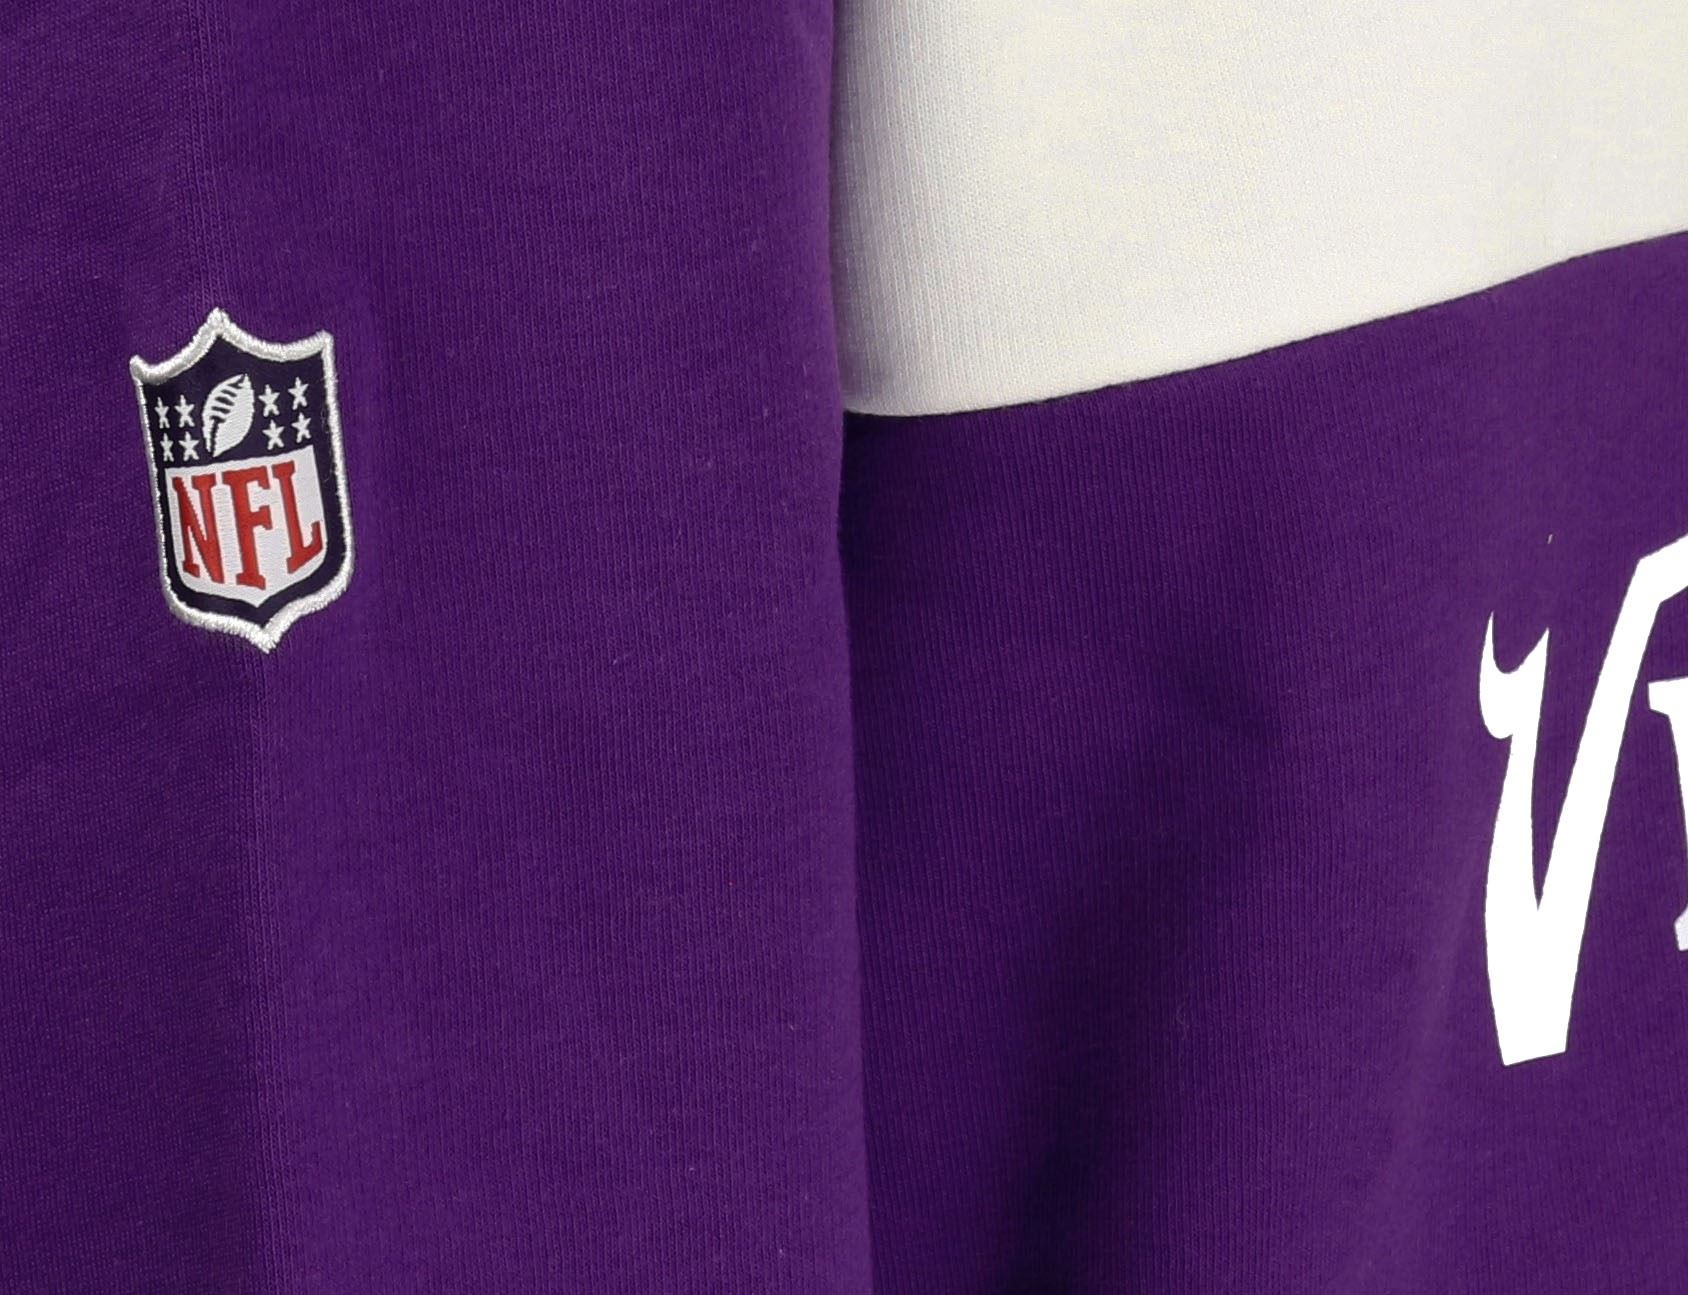 Minnesota Vikings NFL Colour Block Hoody White  / Purple New Era